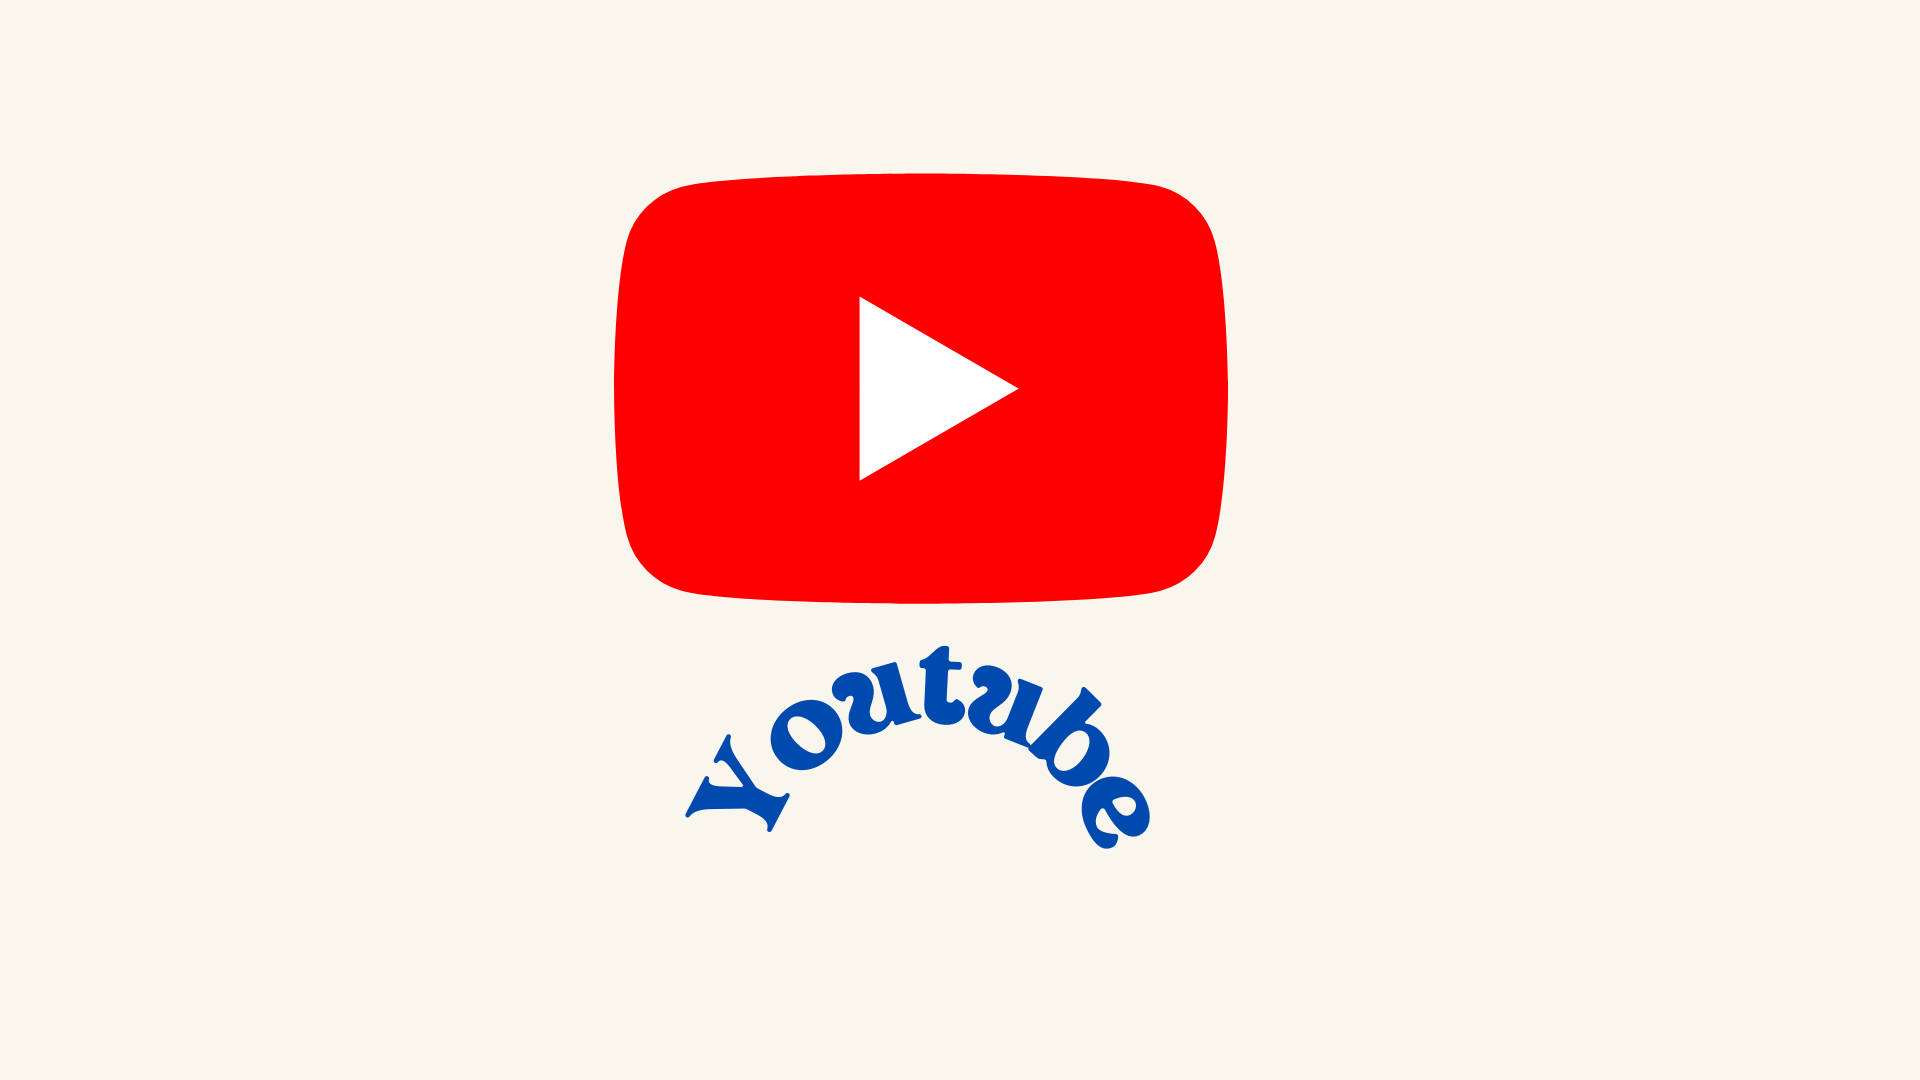 Youtube Logo In Retro-style